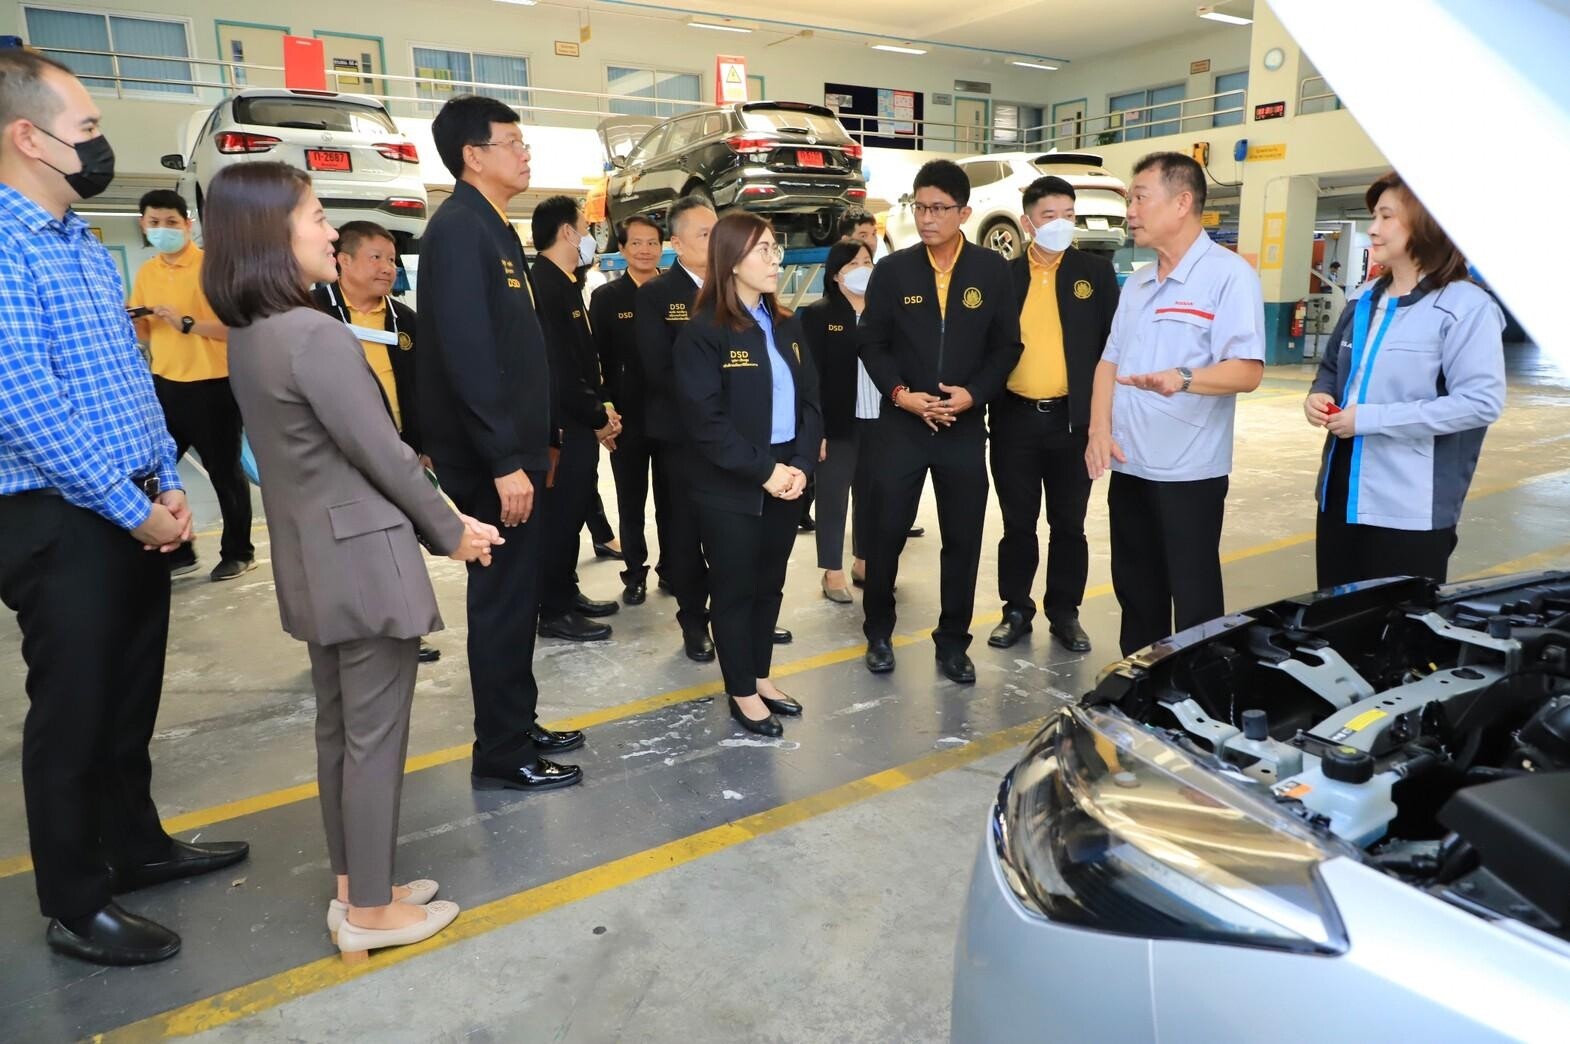 AHRDA เปิดหลักสูตร "การซ่อมบำรุงรถยนต์ไฟฟ้า" โดยวิทยากรผู้เชี่ยวชาญ และ Nissan ร่วมแจมเสริมความรู้